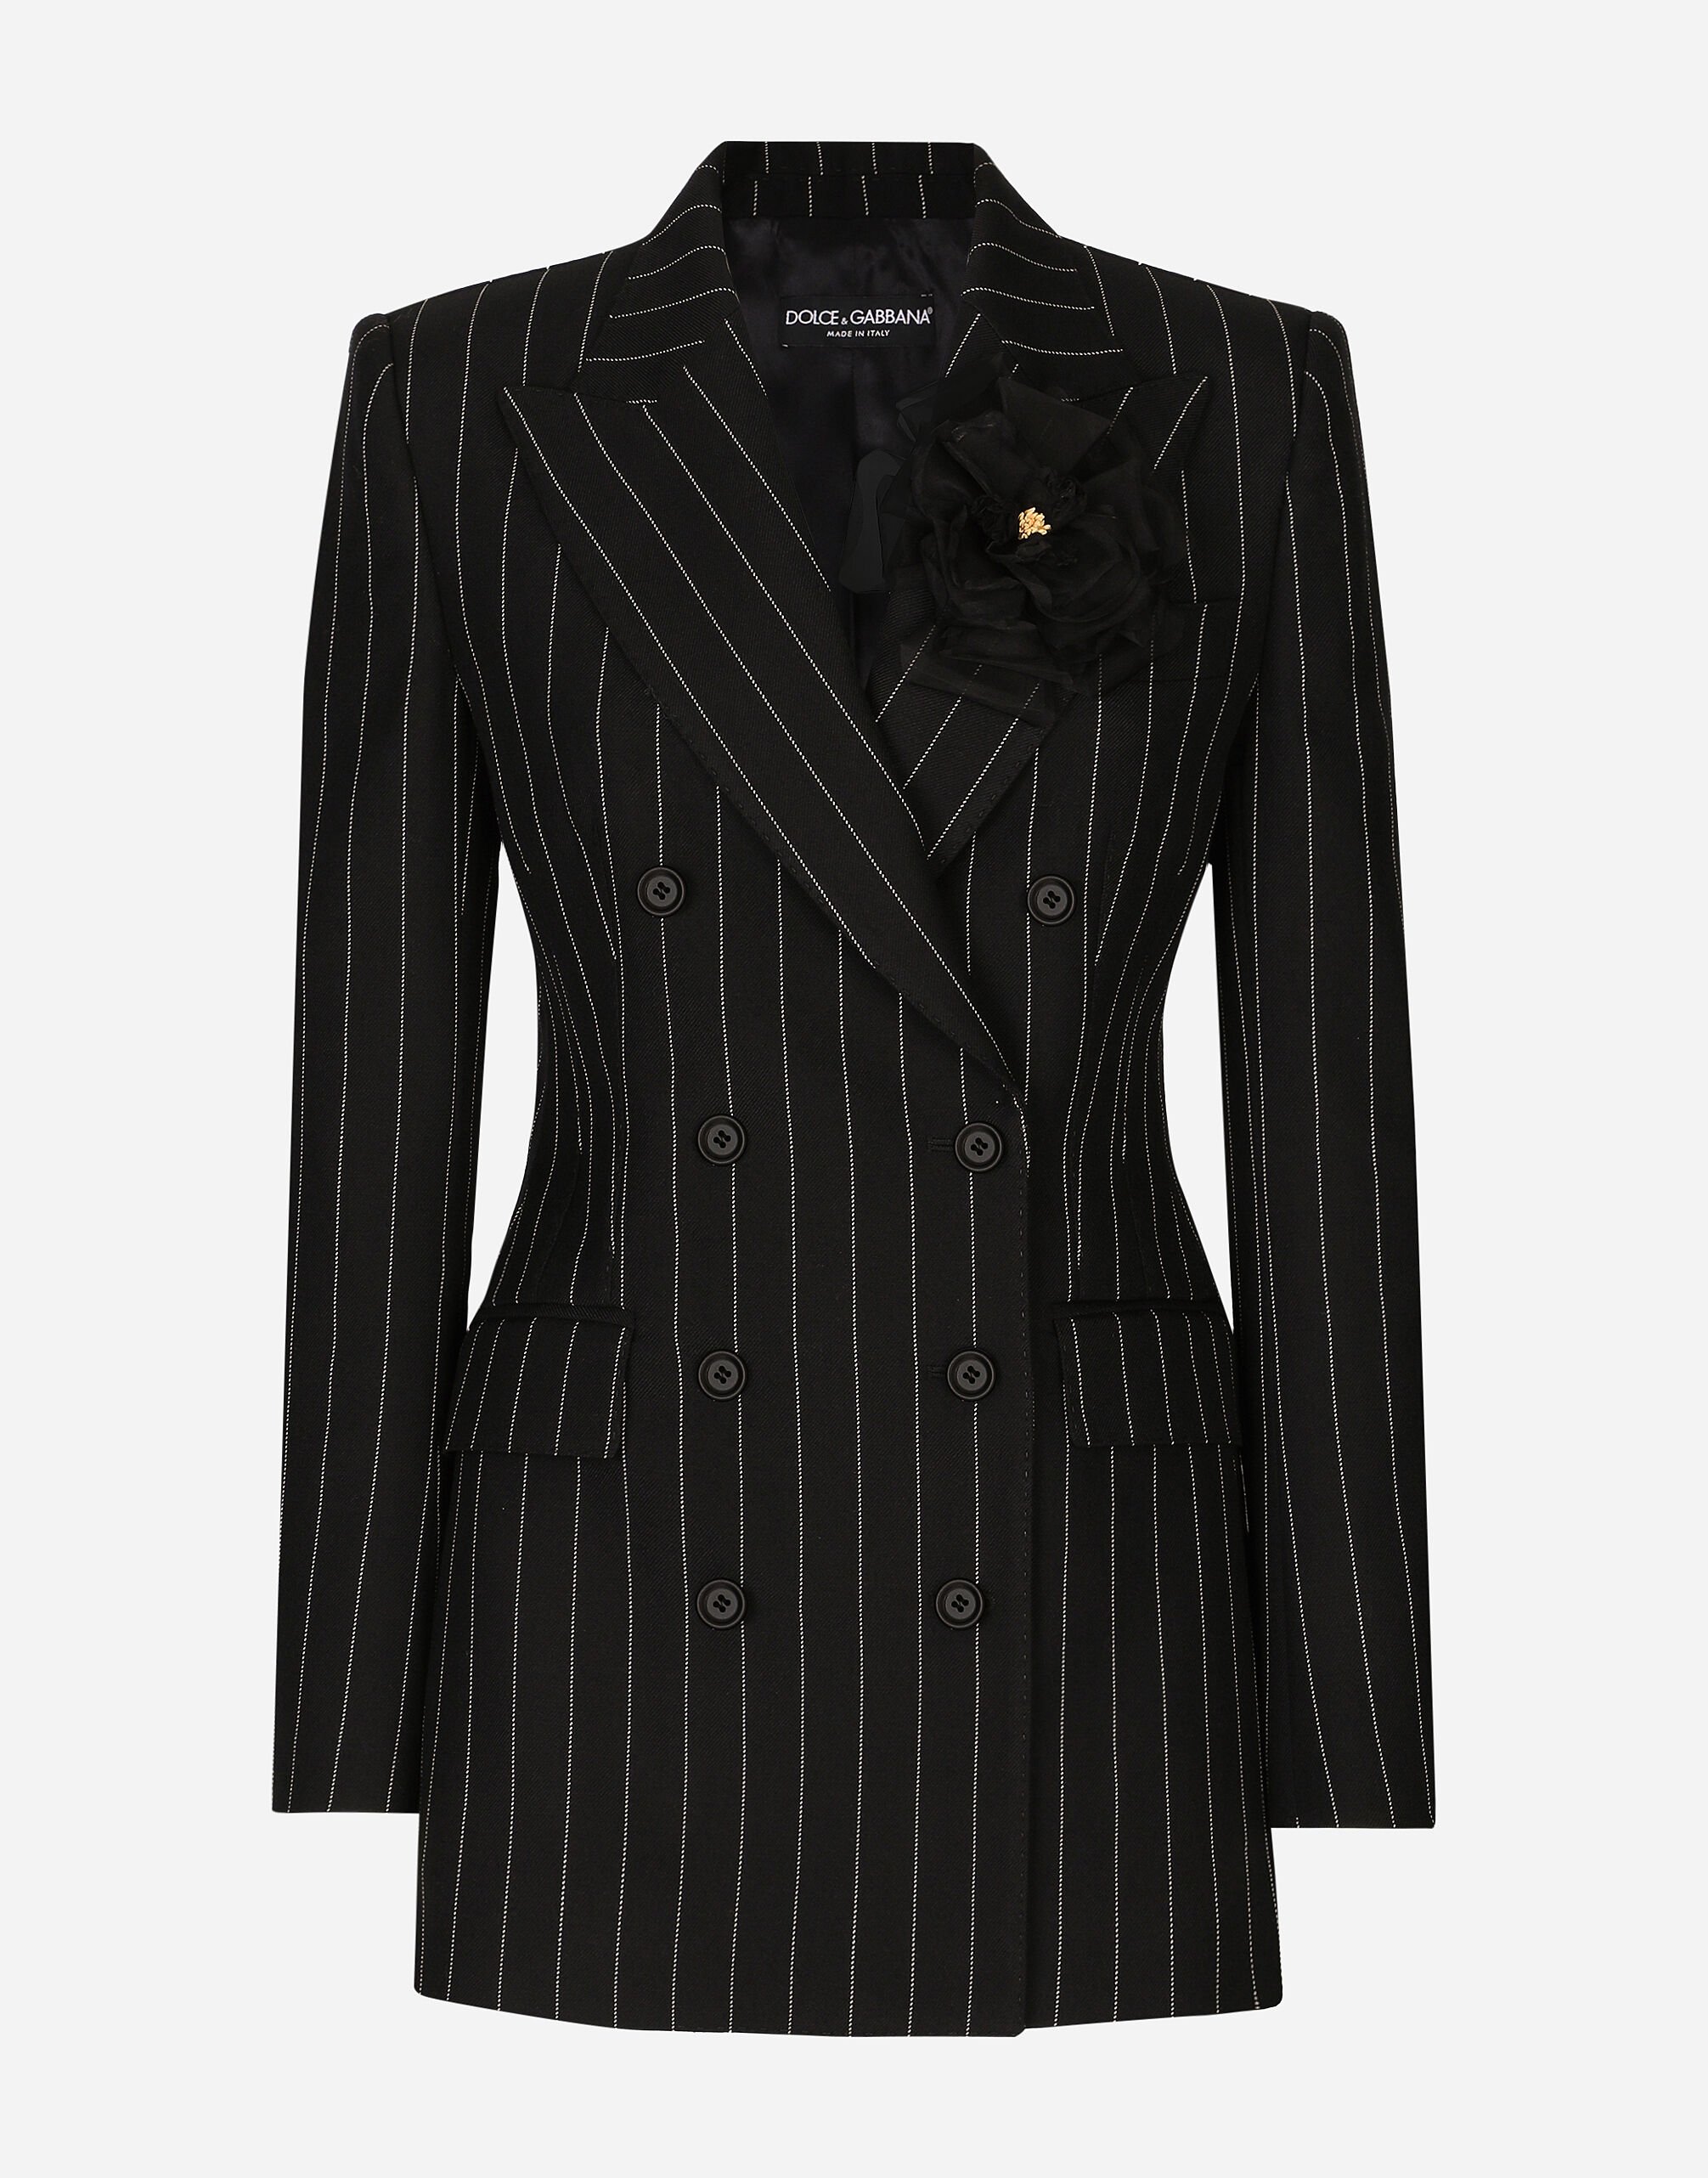 Dolce & Gabbana Double-breasted pinstripe woolen Turlington jacket Black F27AGTFMTAC